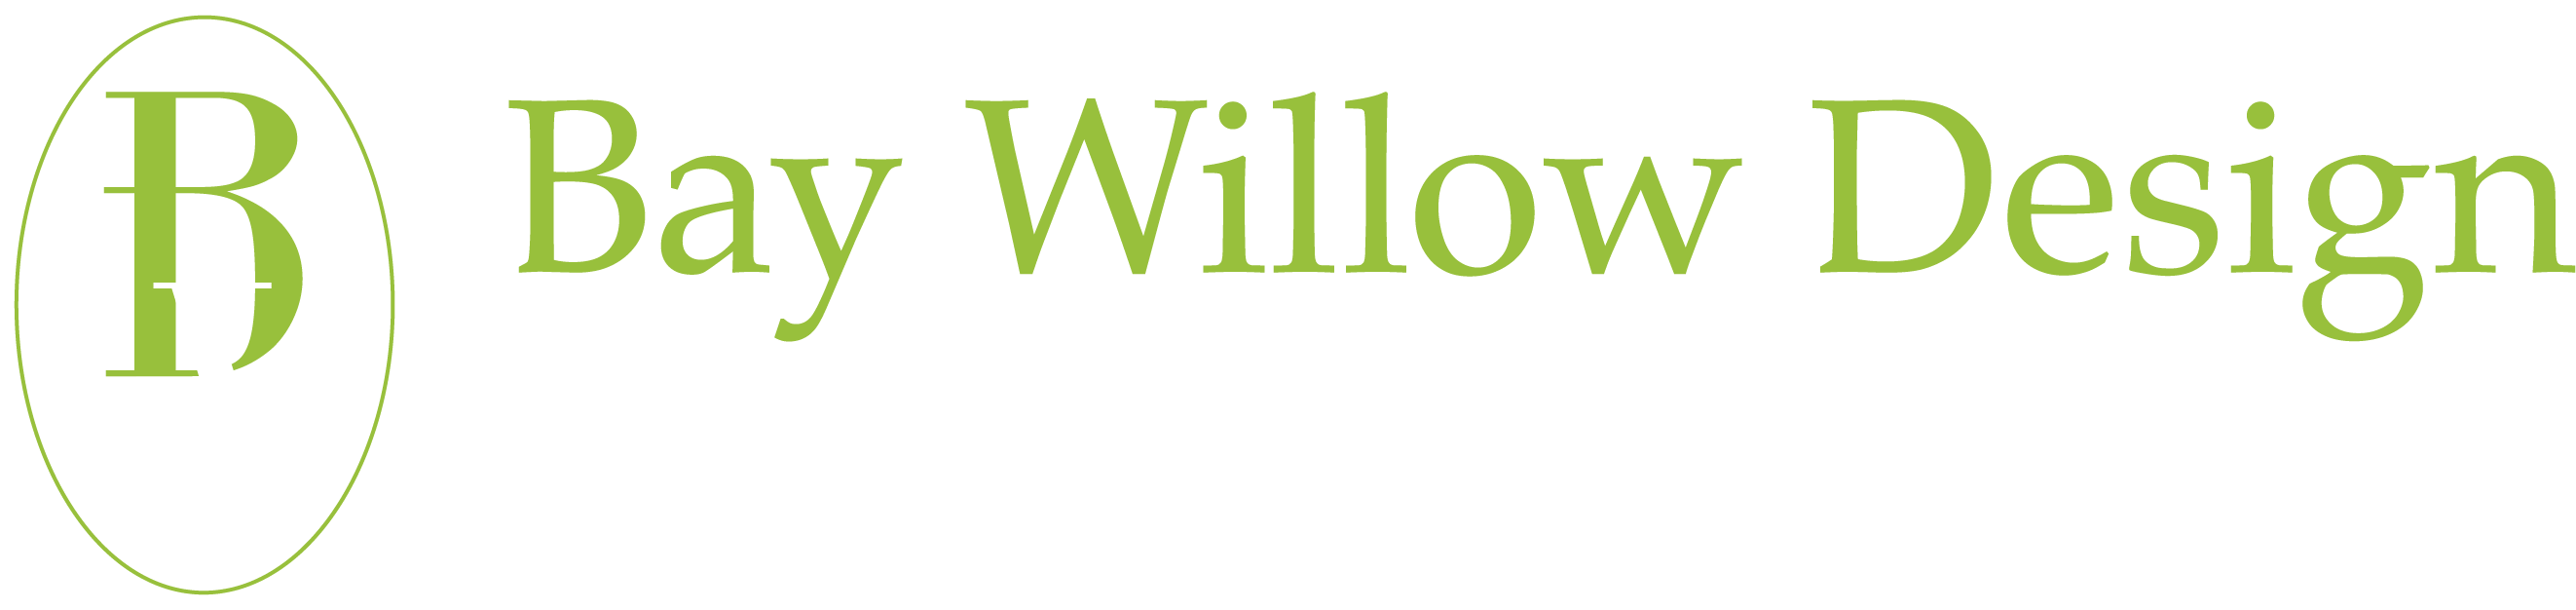 Bay Willow Design